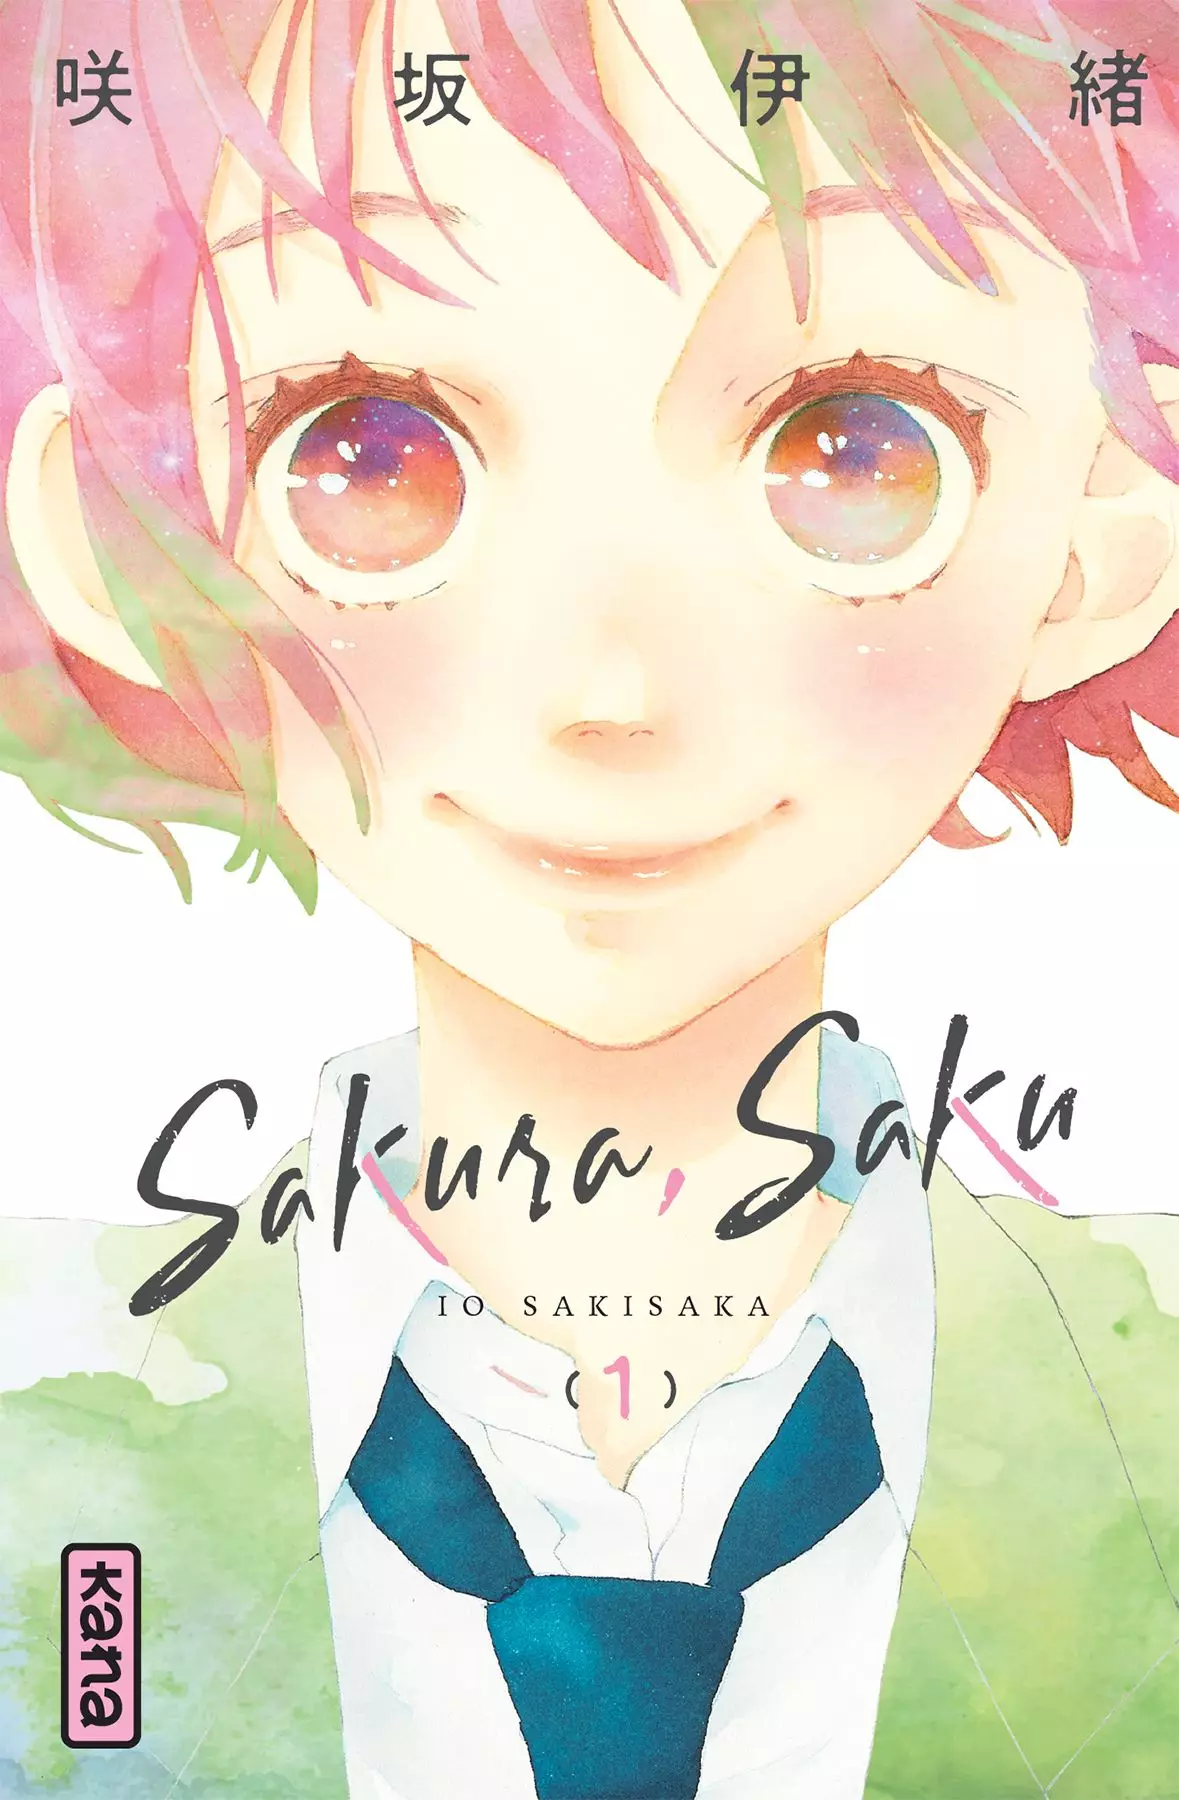 Couverture du premier tome de Sakura Saku